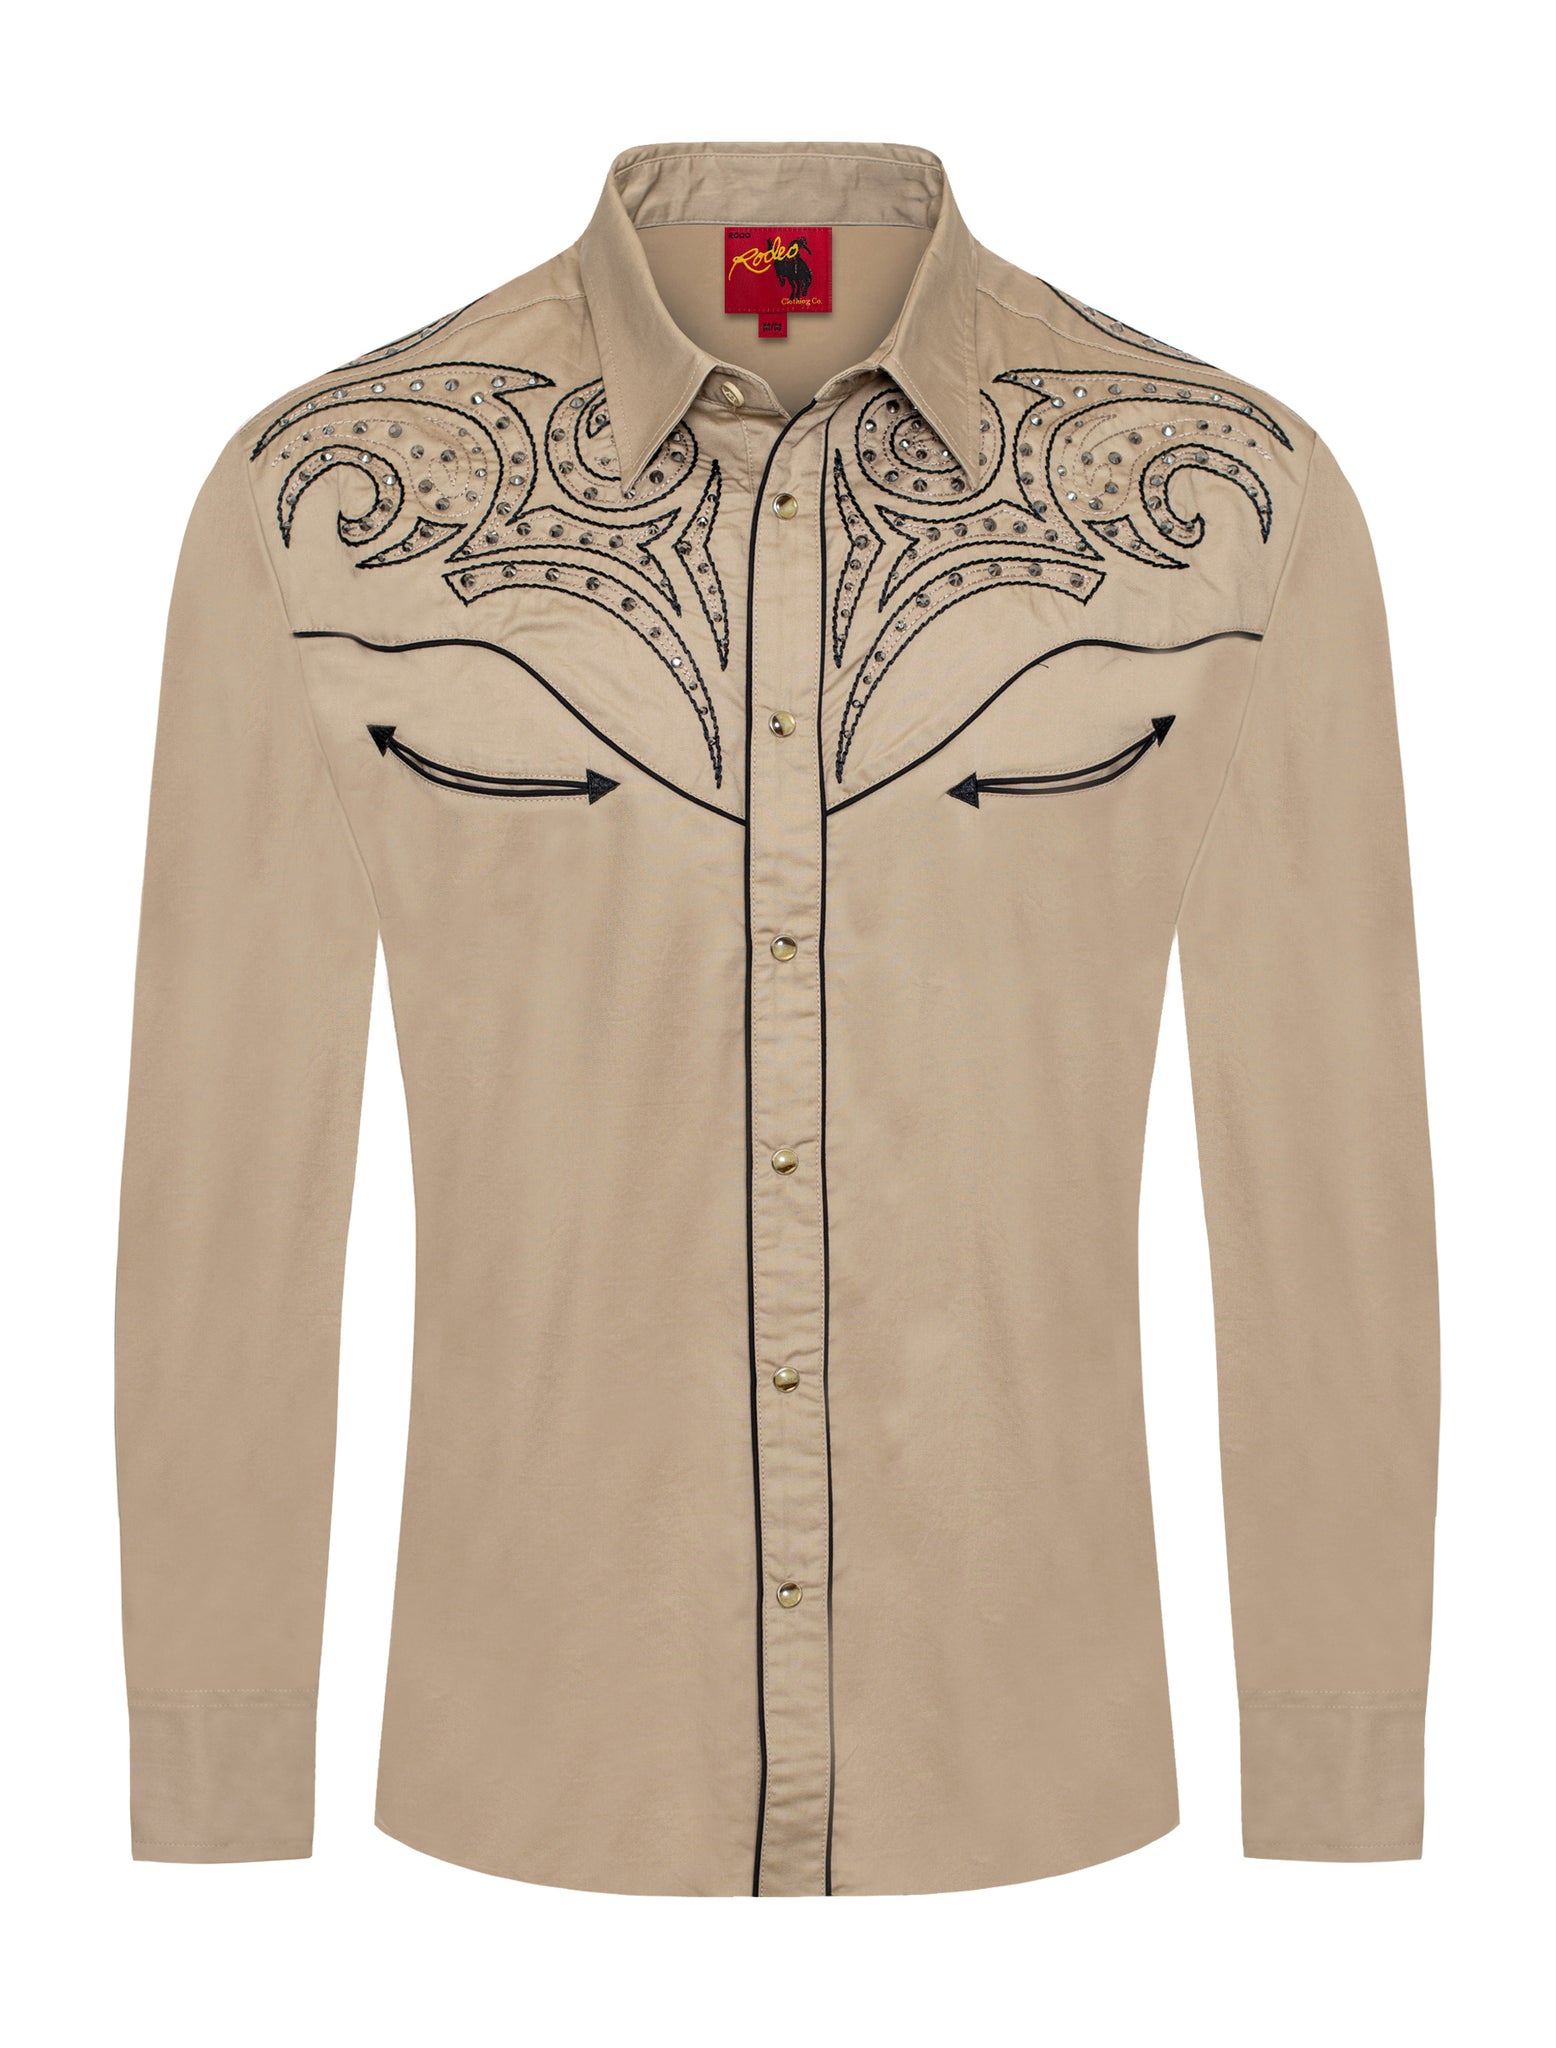 Men's Western Cowboy Embroidery Shirt-PS500D-1005